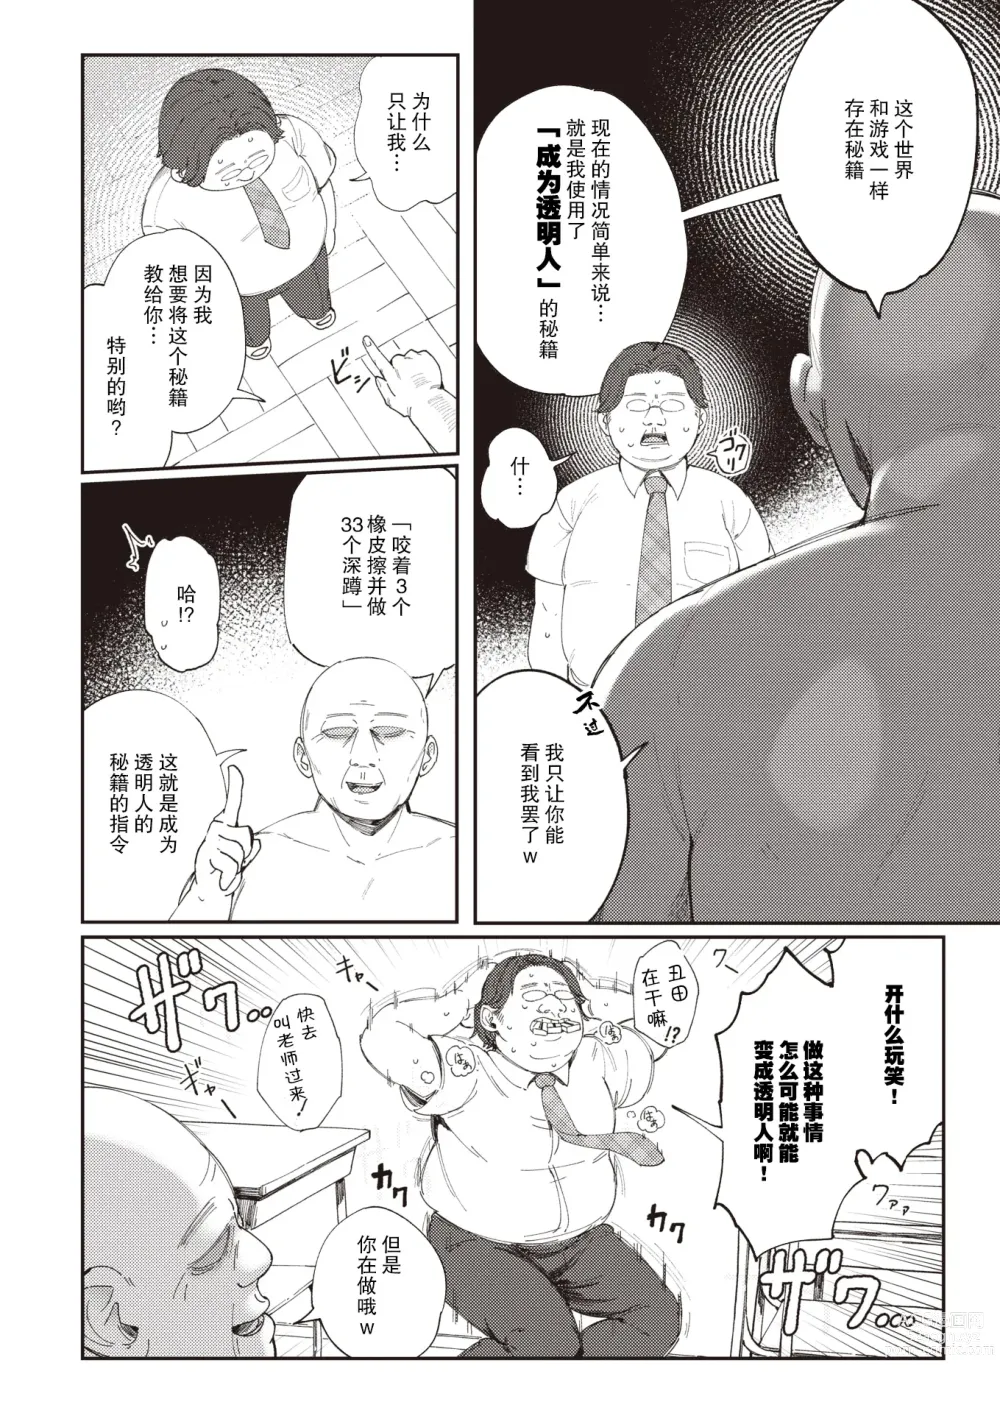 Page 7 of manga ERO ACTION REPLAY!!